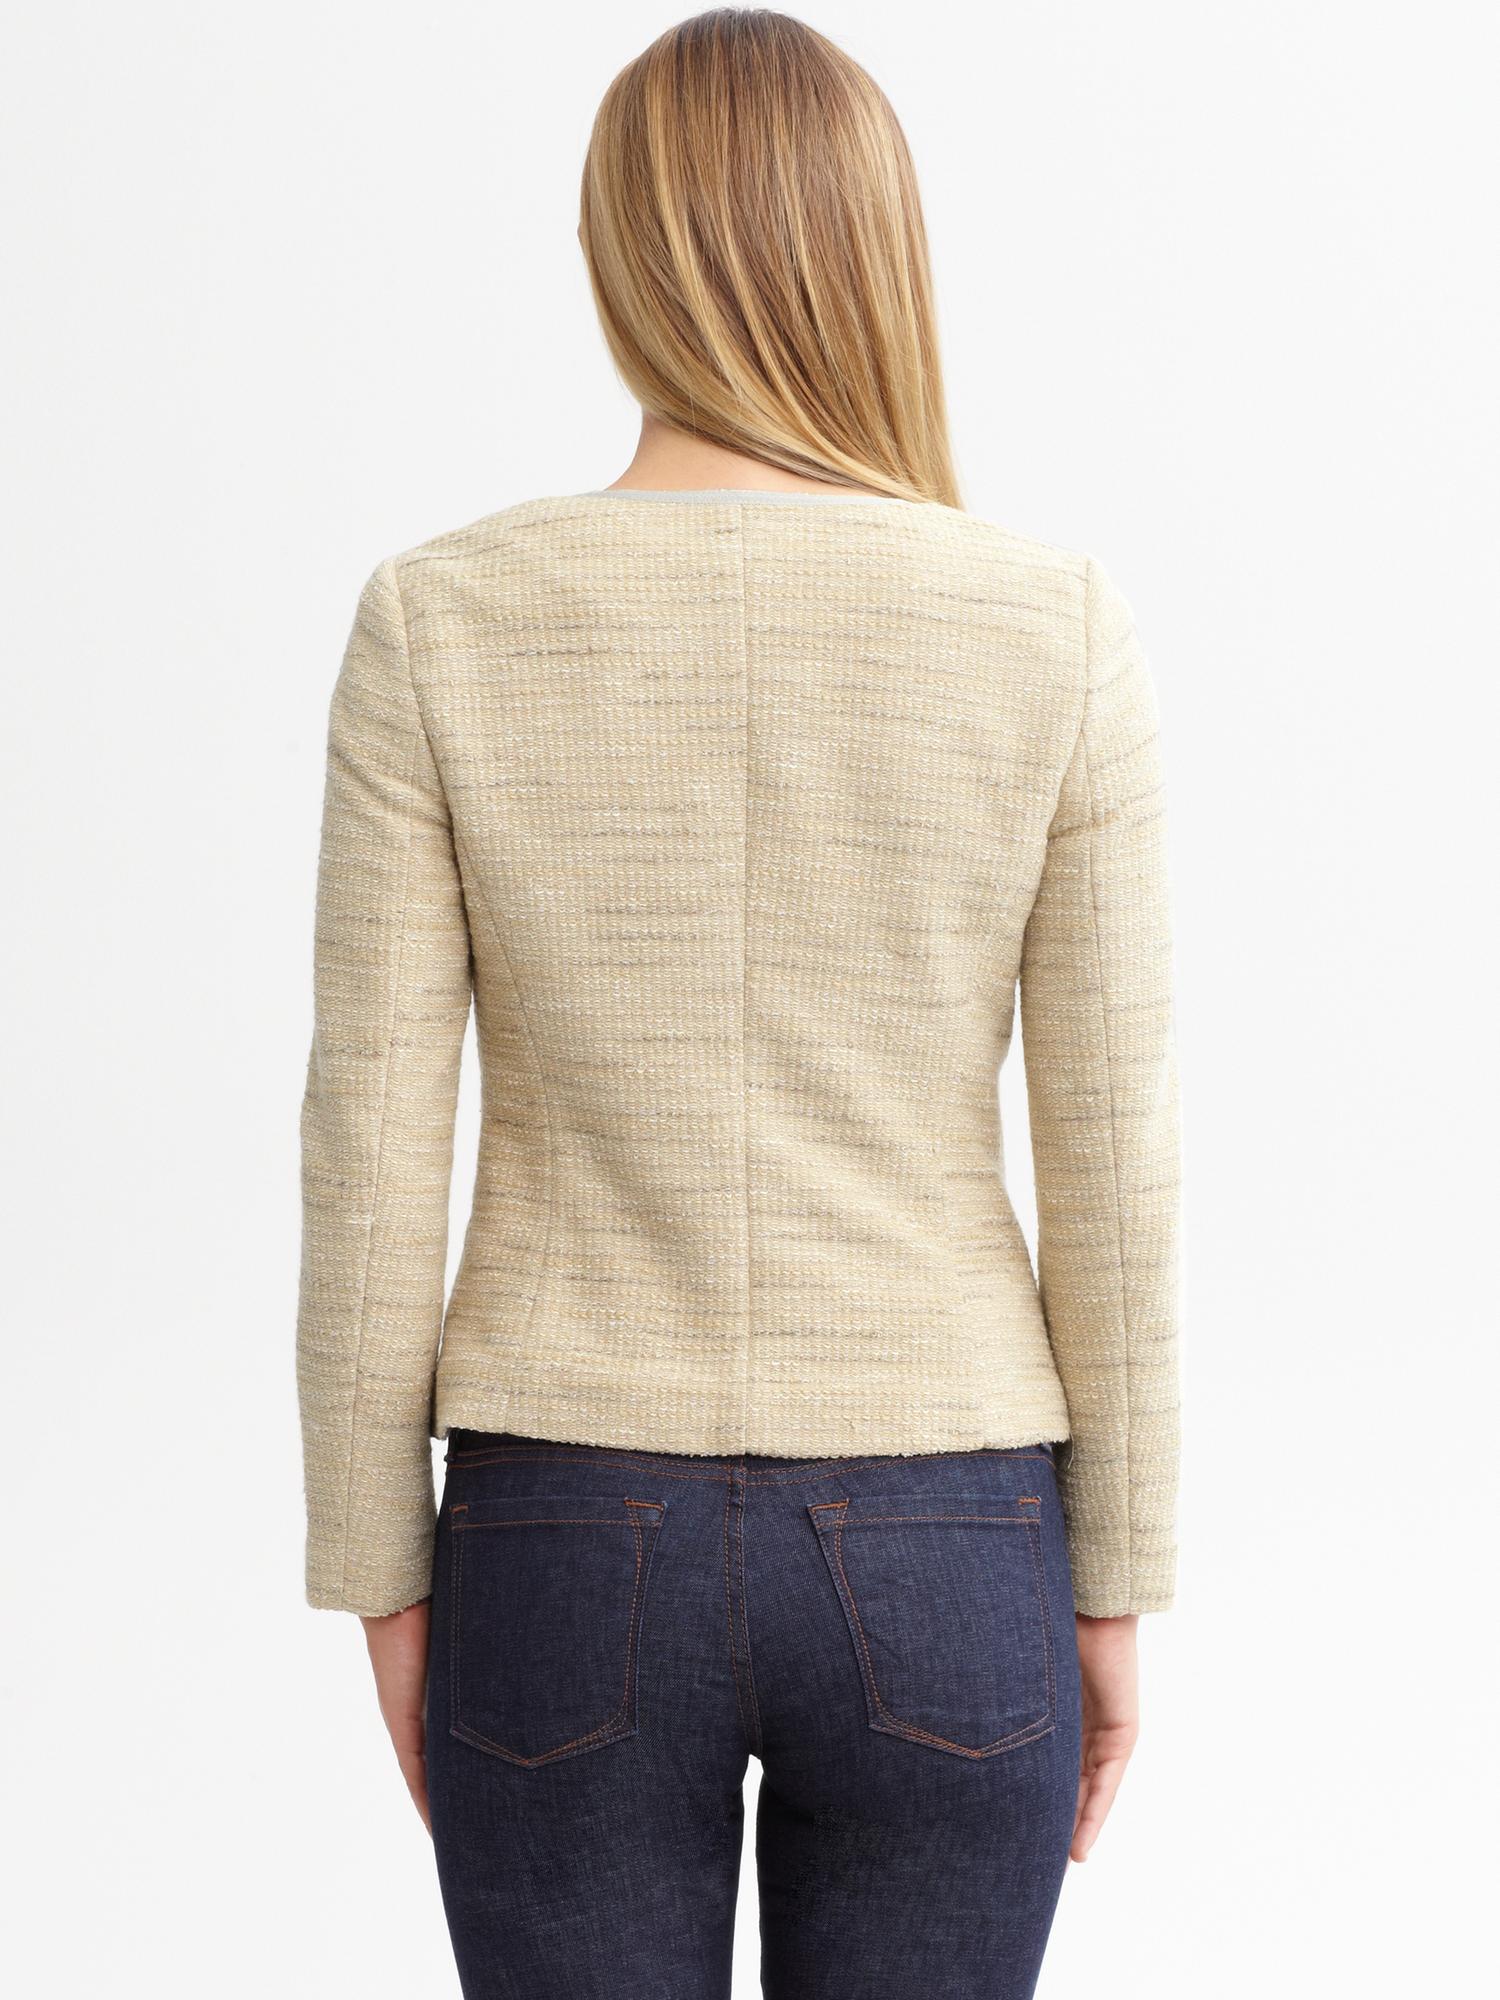 Textured knit lady jacket